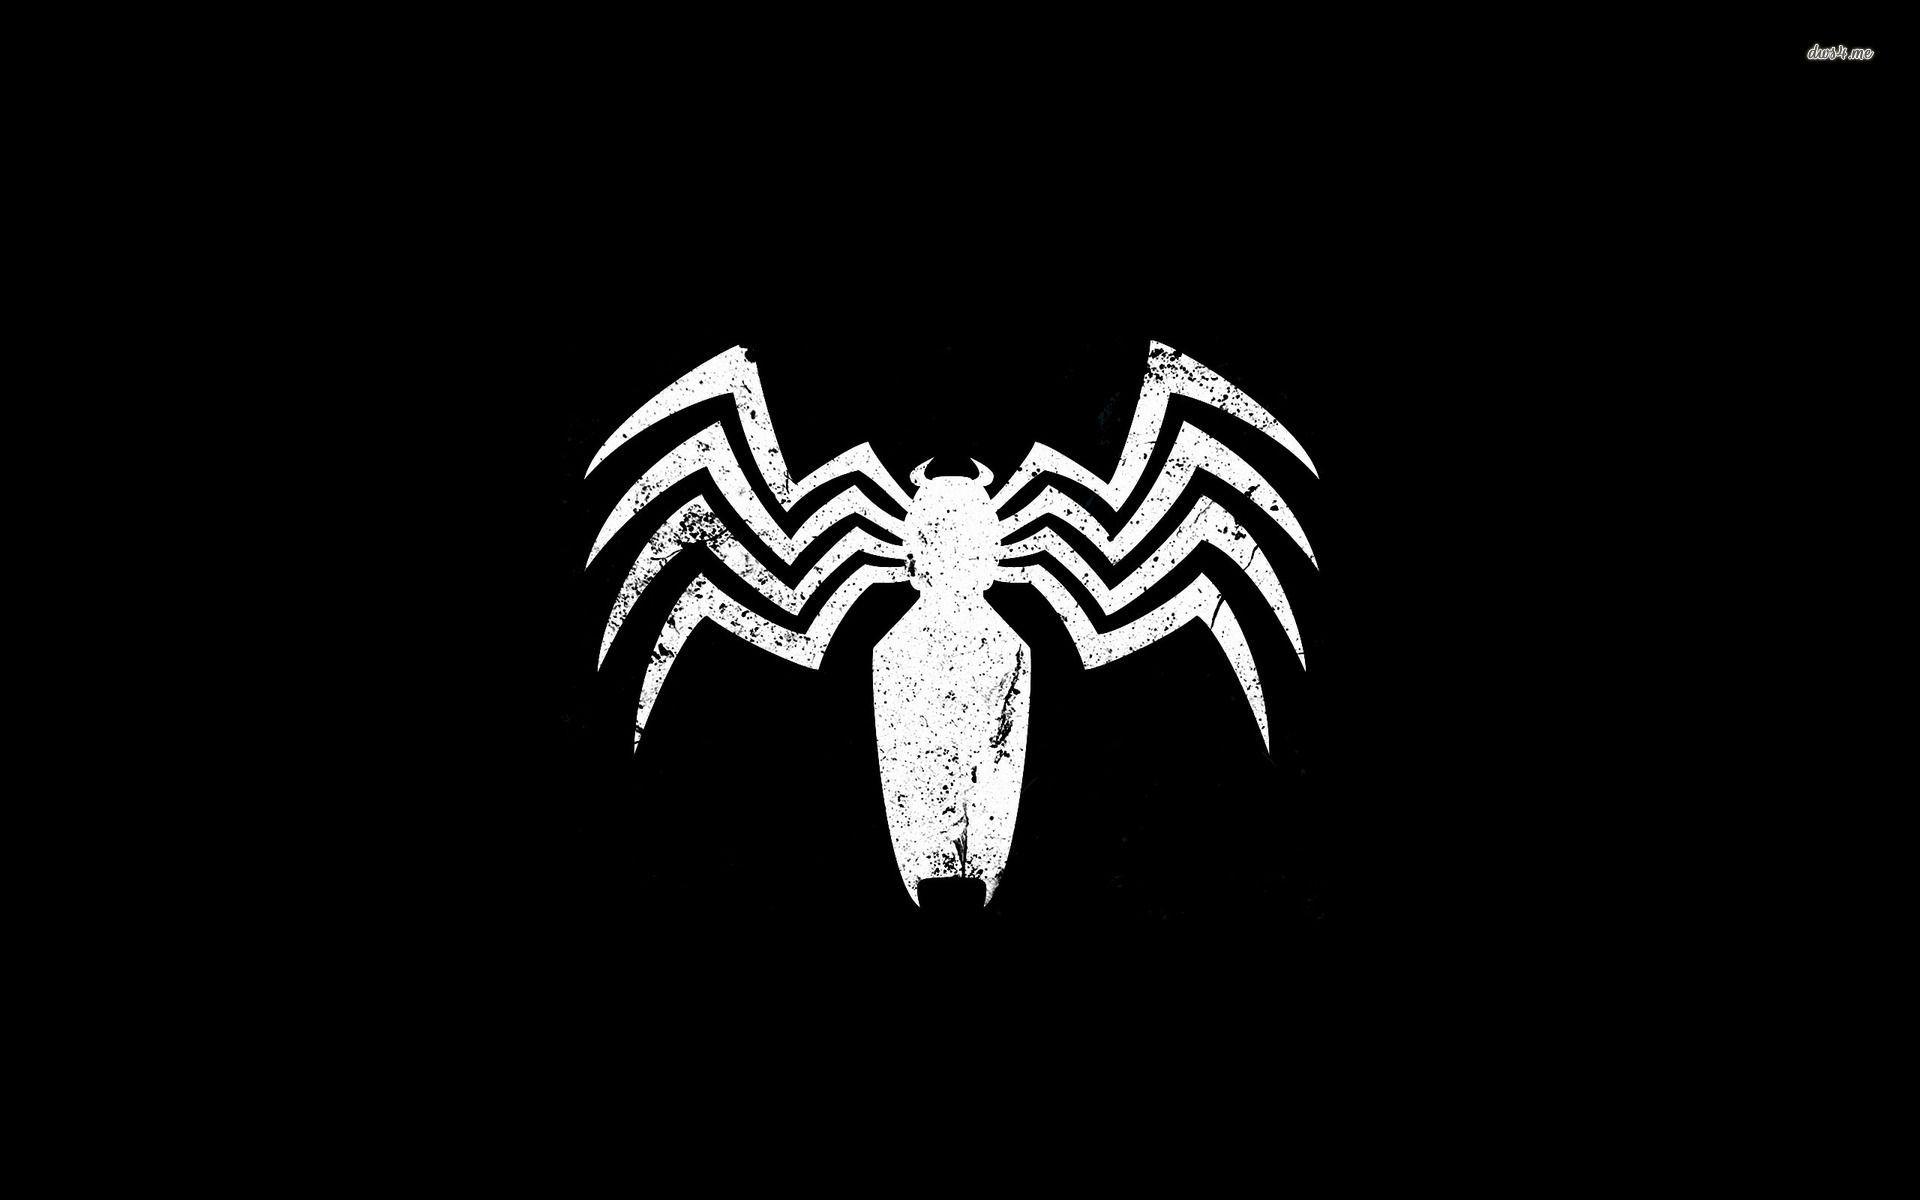 Venom Wallpaper, Best & Inspirational High Quality Venom